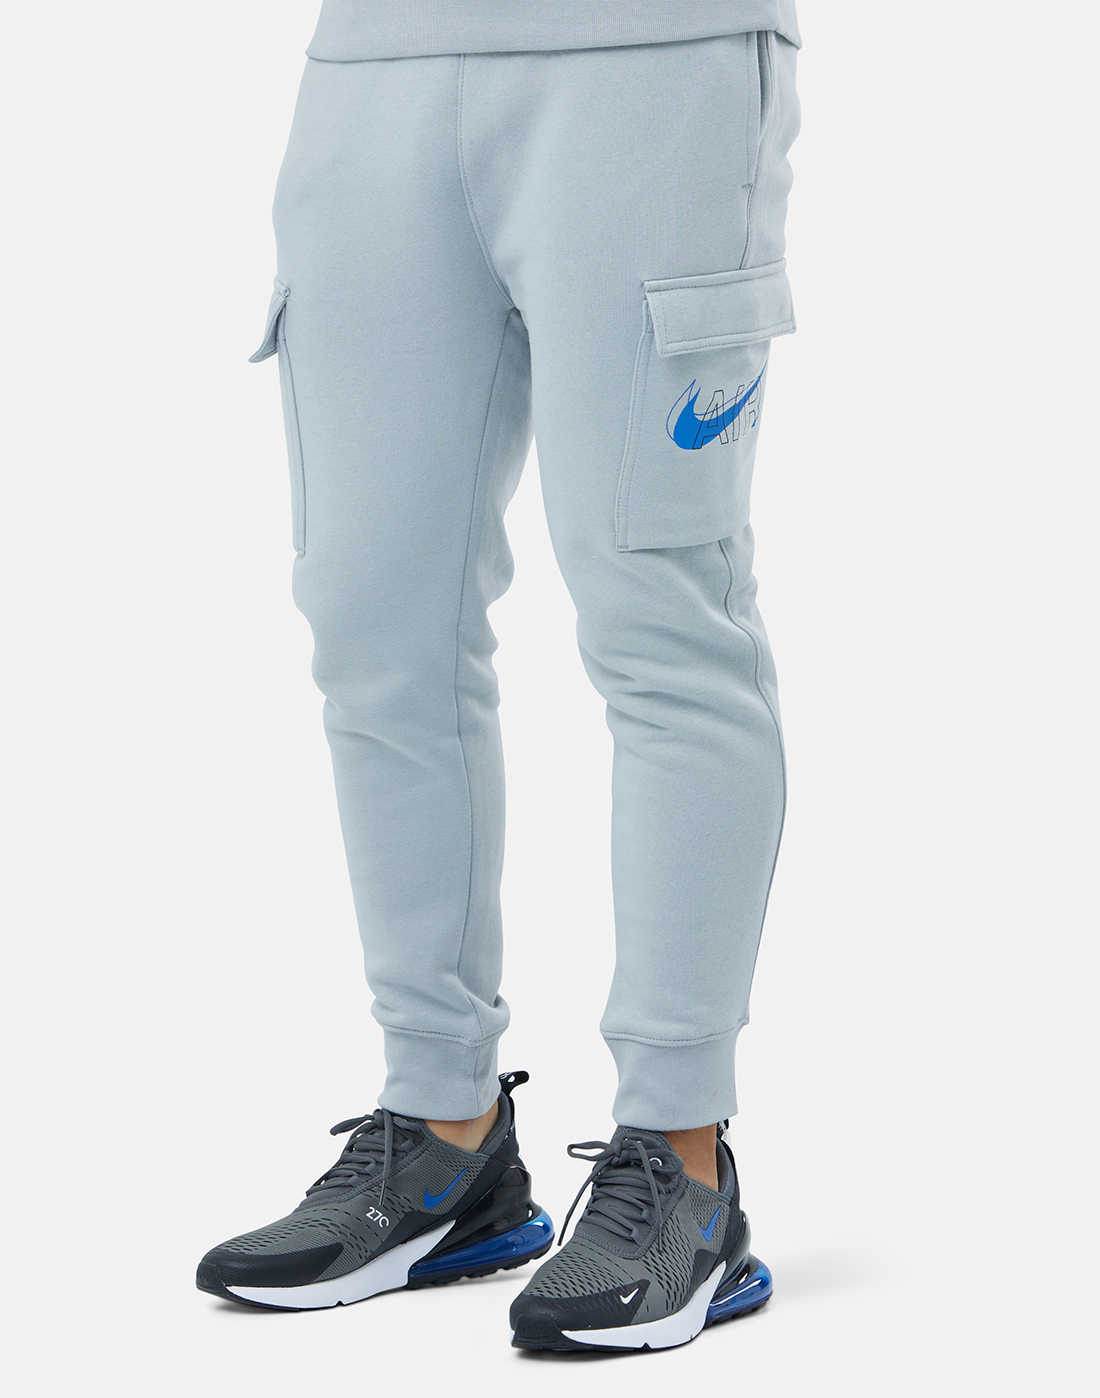 Nike Mens Air Cargo Pants - Grey | Life Style Sports UK